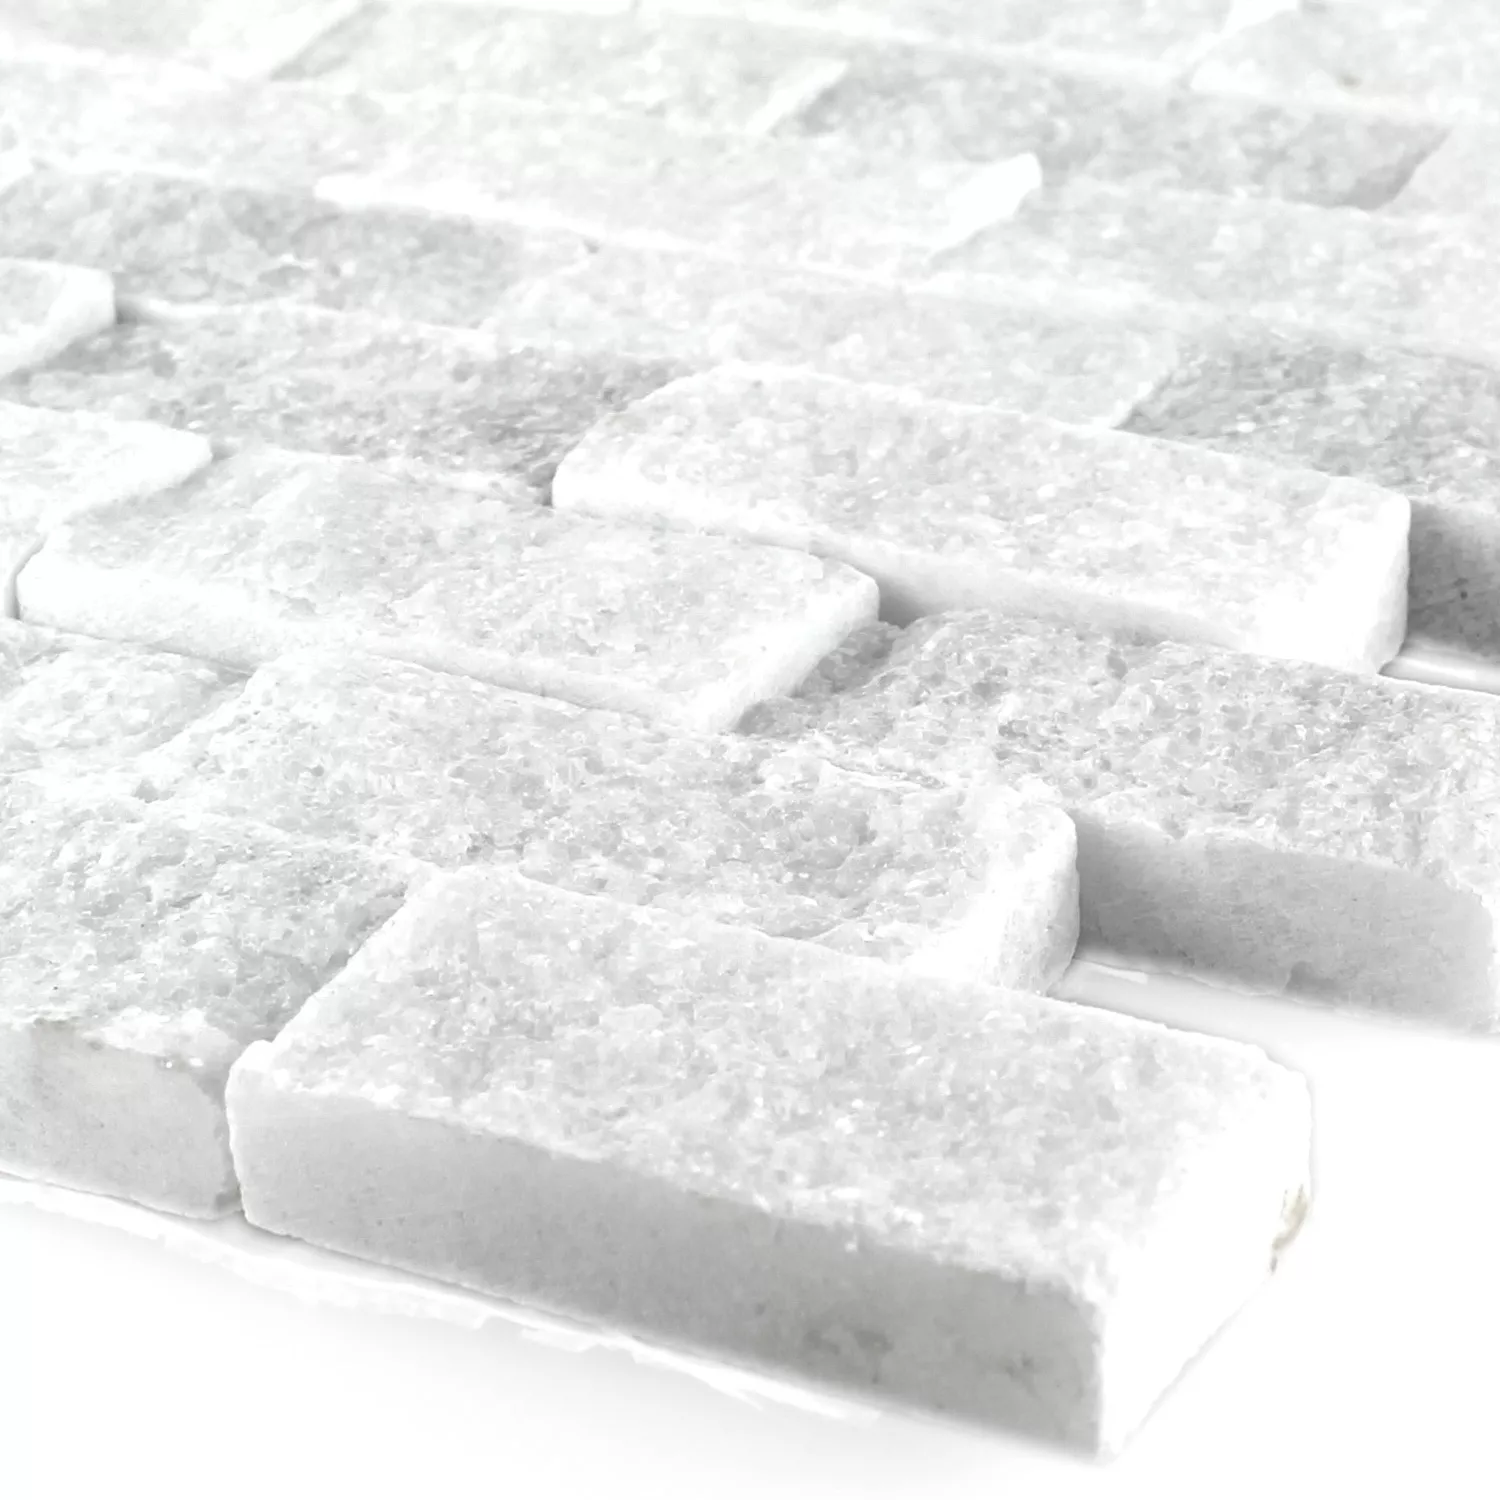 Sample Mosaic Tiles Natural Stone Marble Treviso Brick White 3D